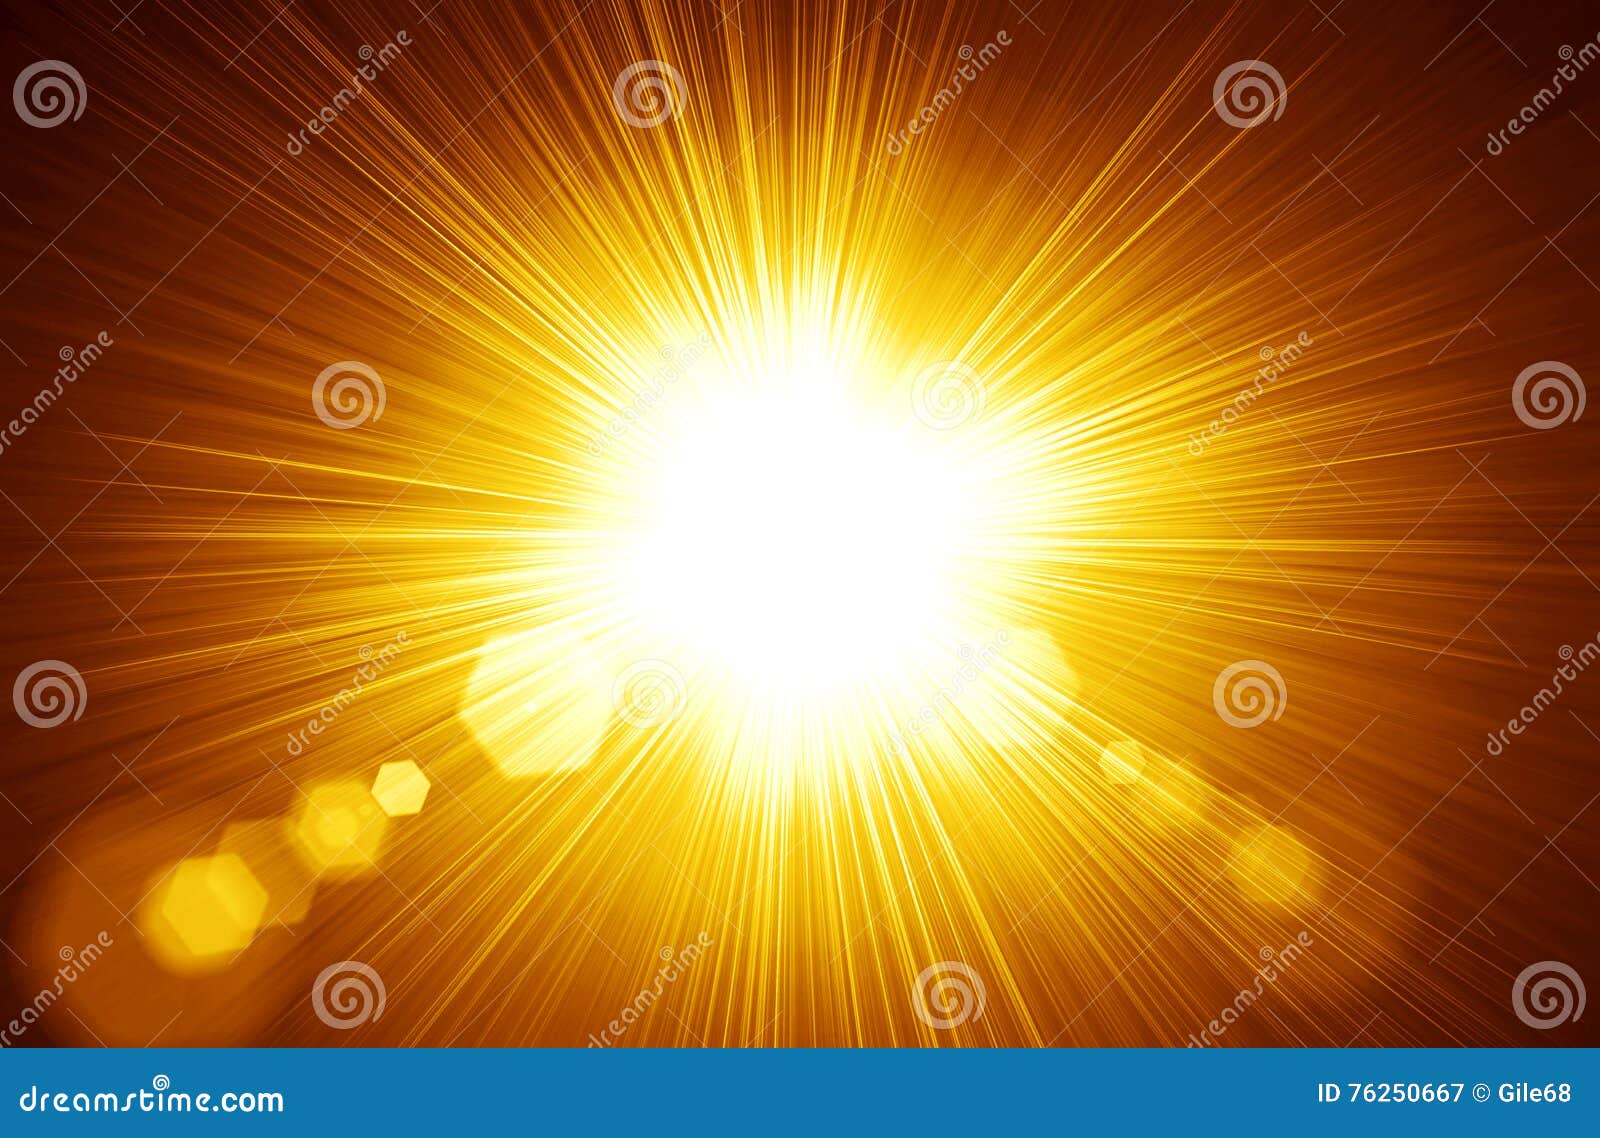 centered yellow orange summer sun light burst. radial nature abs